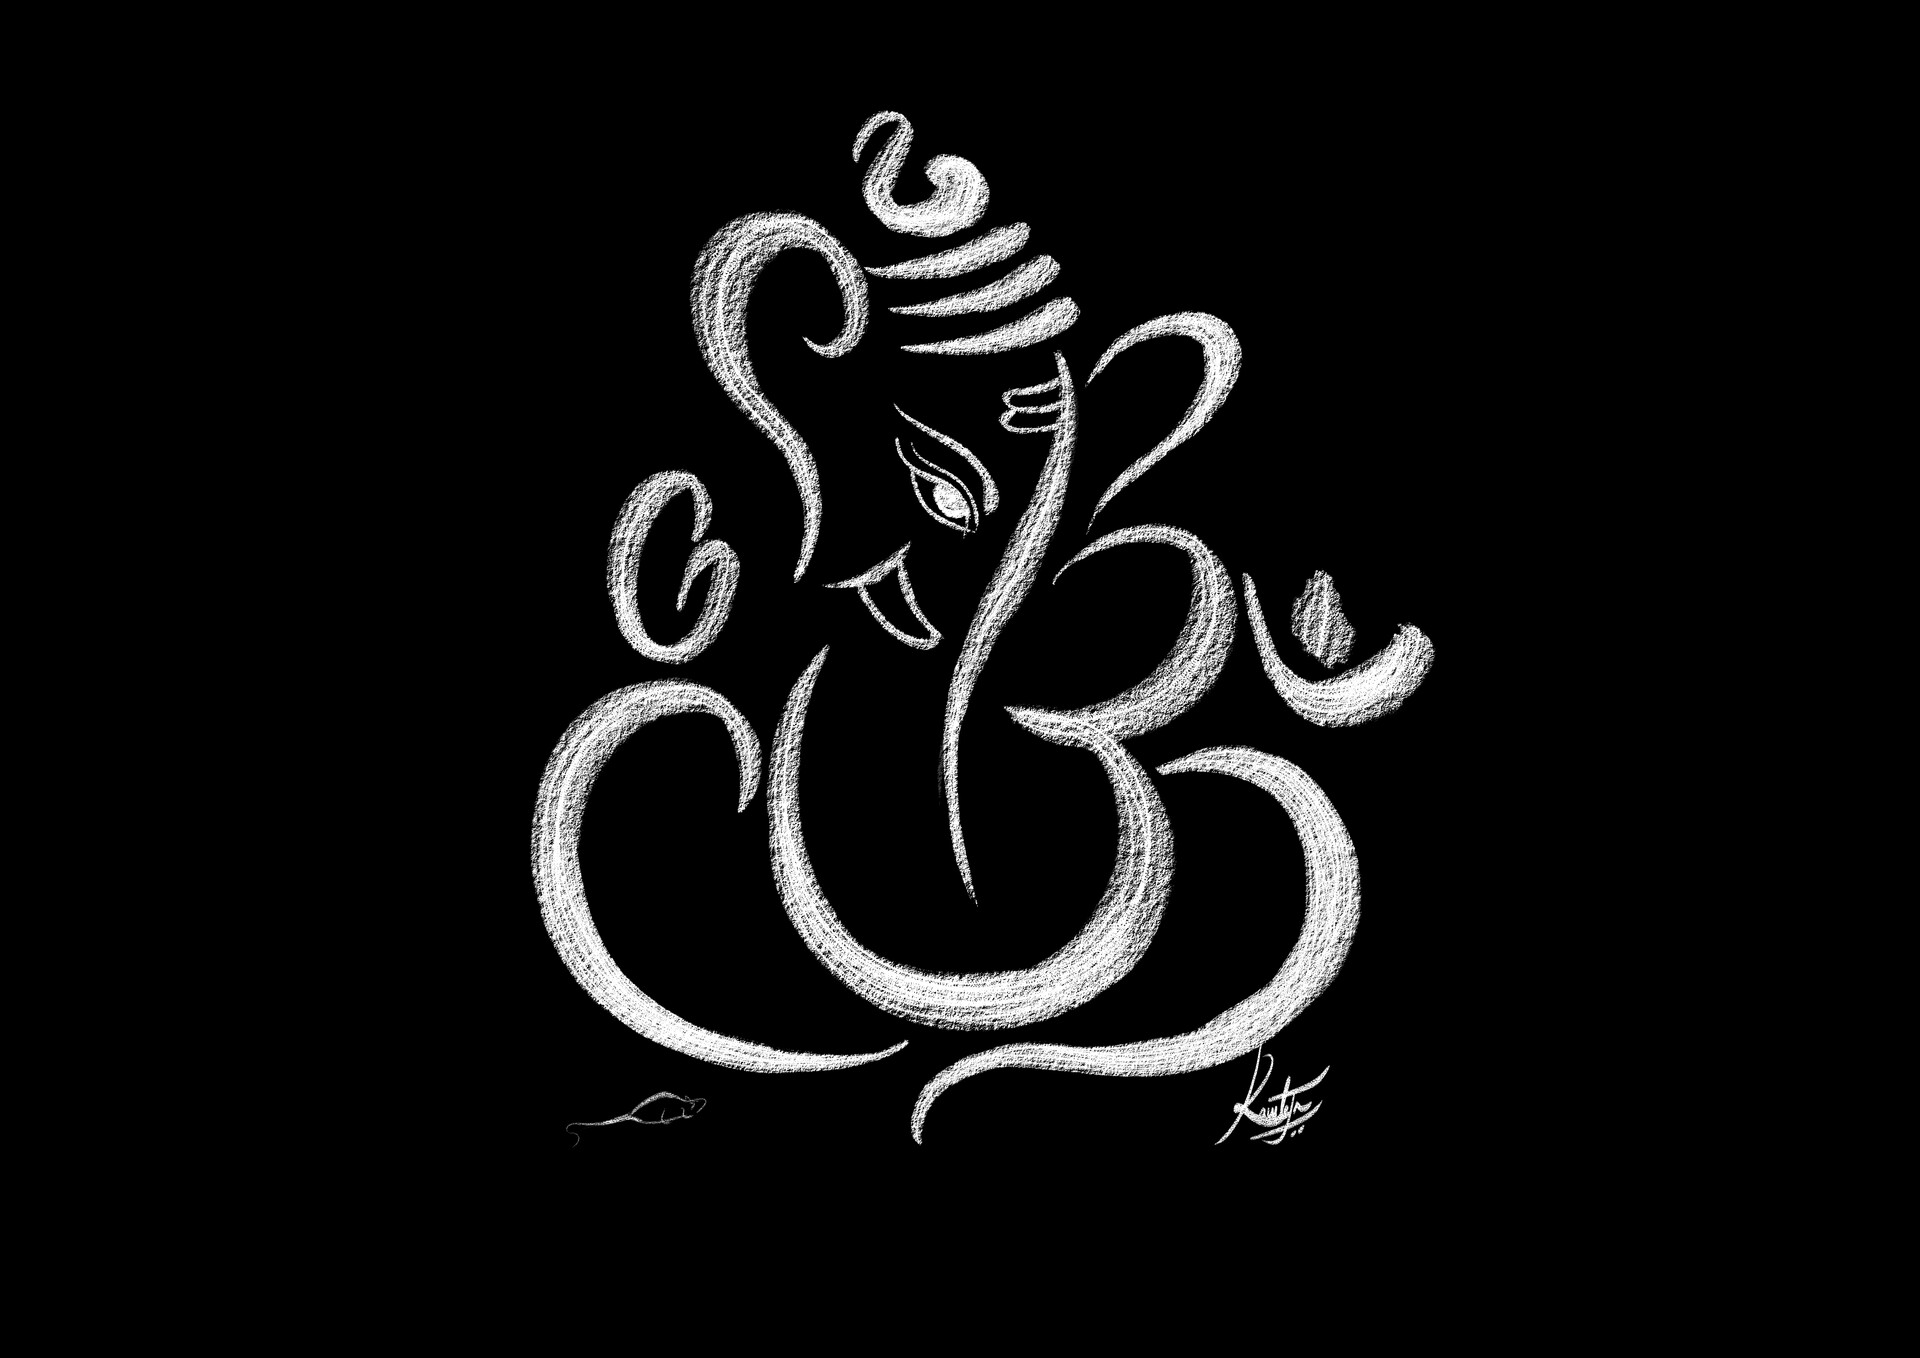 ArtStation - Ganesh_artwork